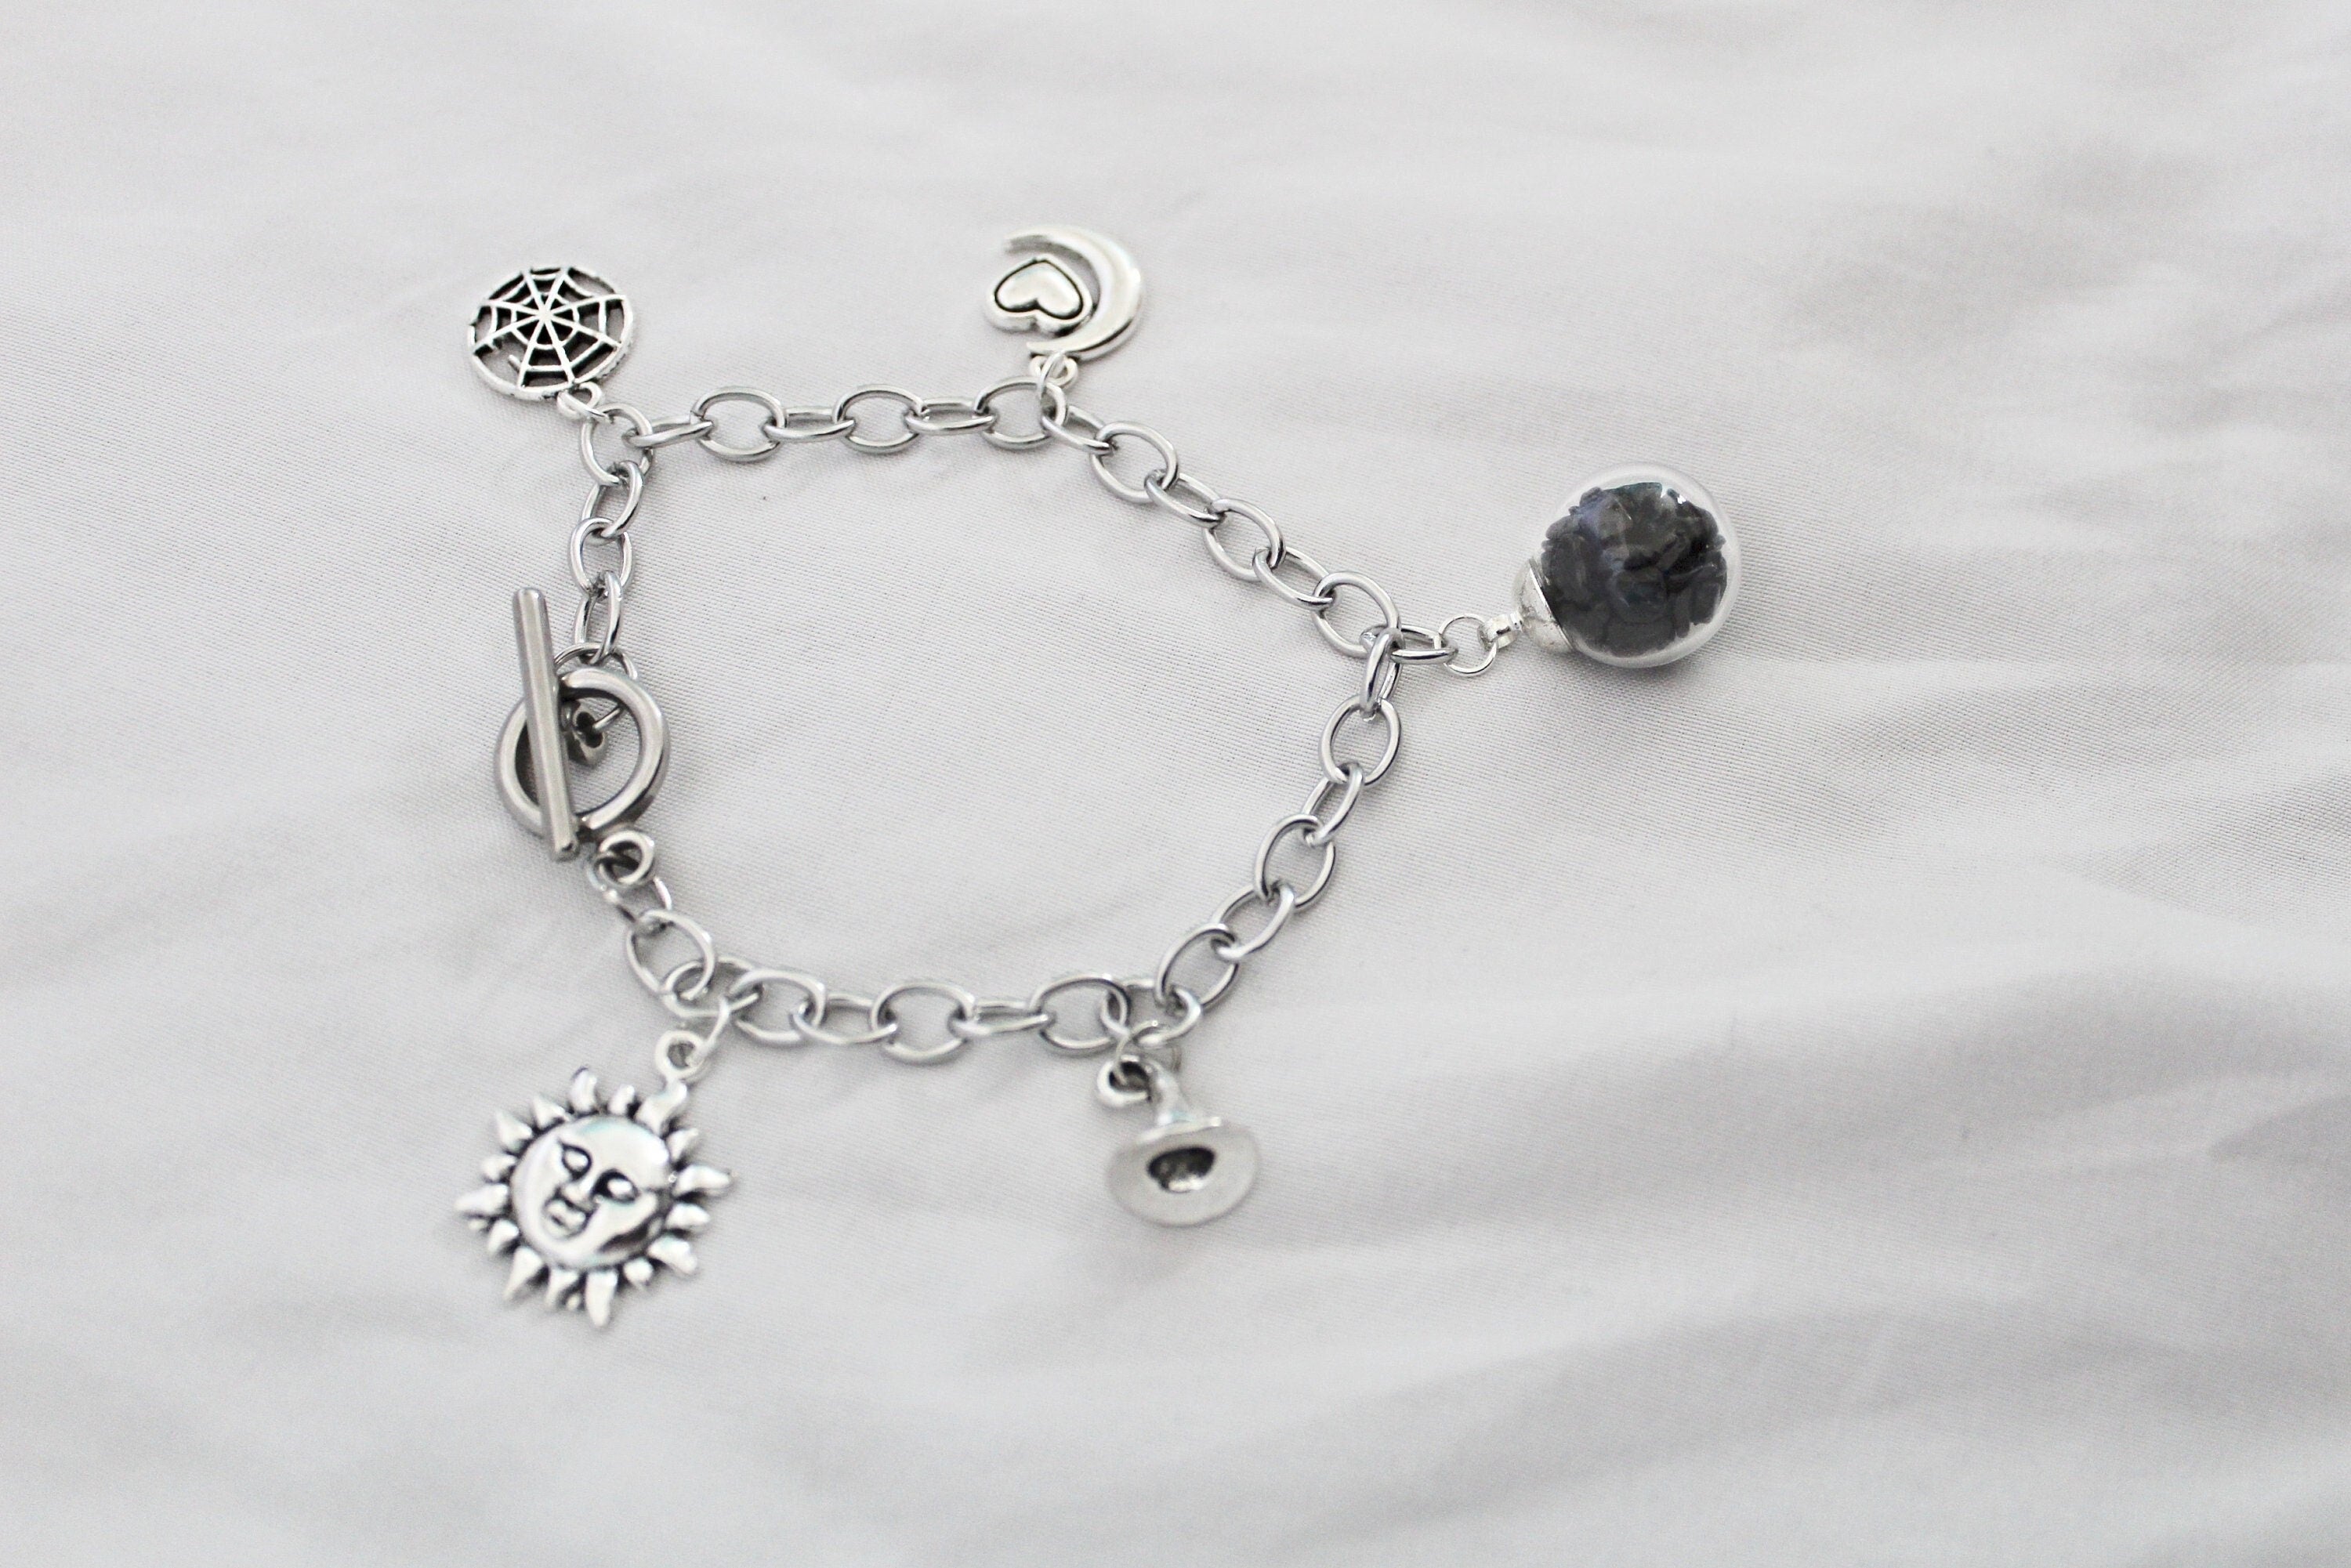 Get Crystal Moon Charm Bracelet at ₹ 890 | LBB Shop